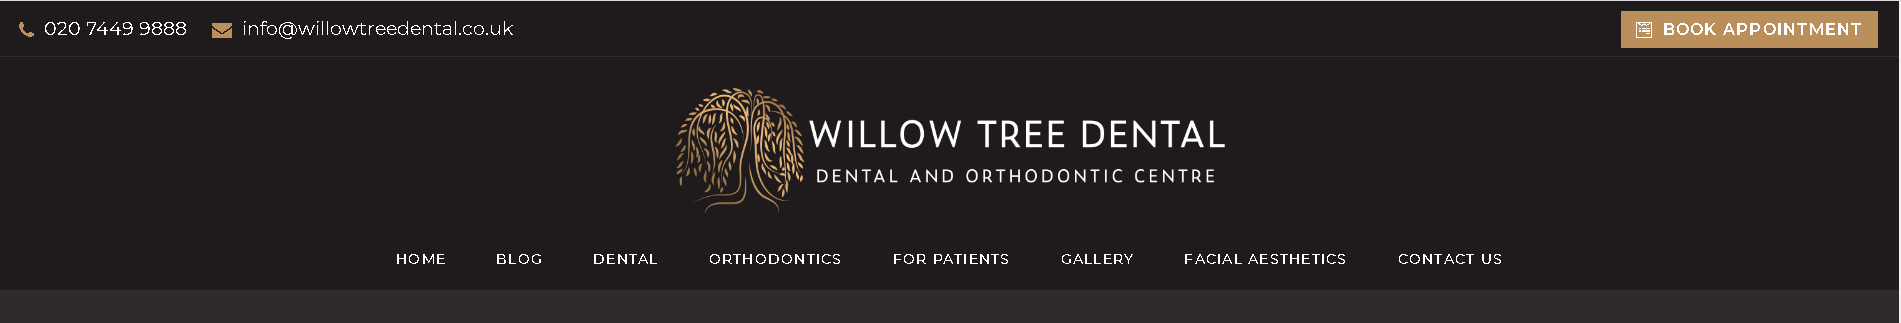 Willow Tree Dental